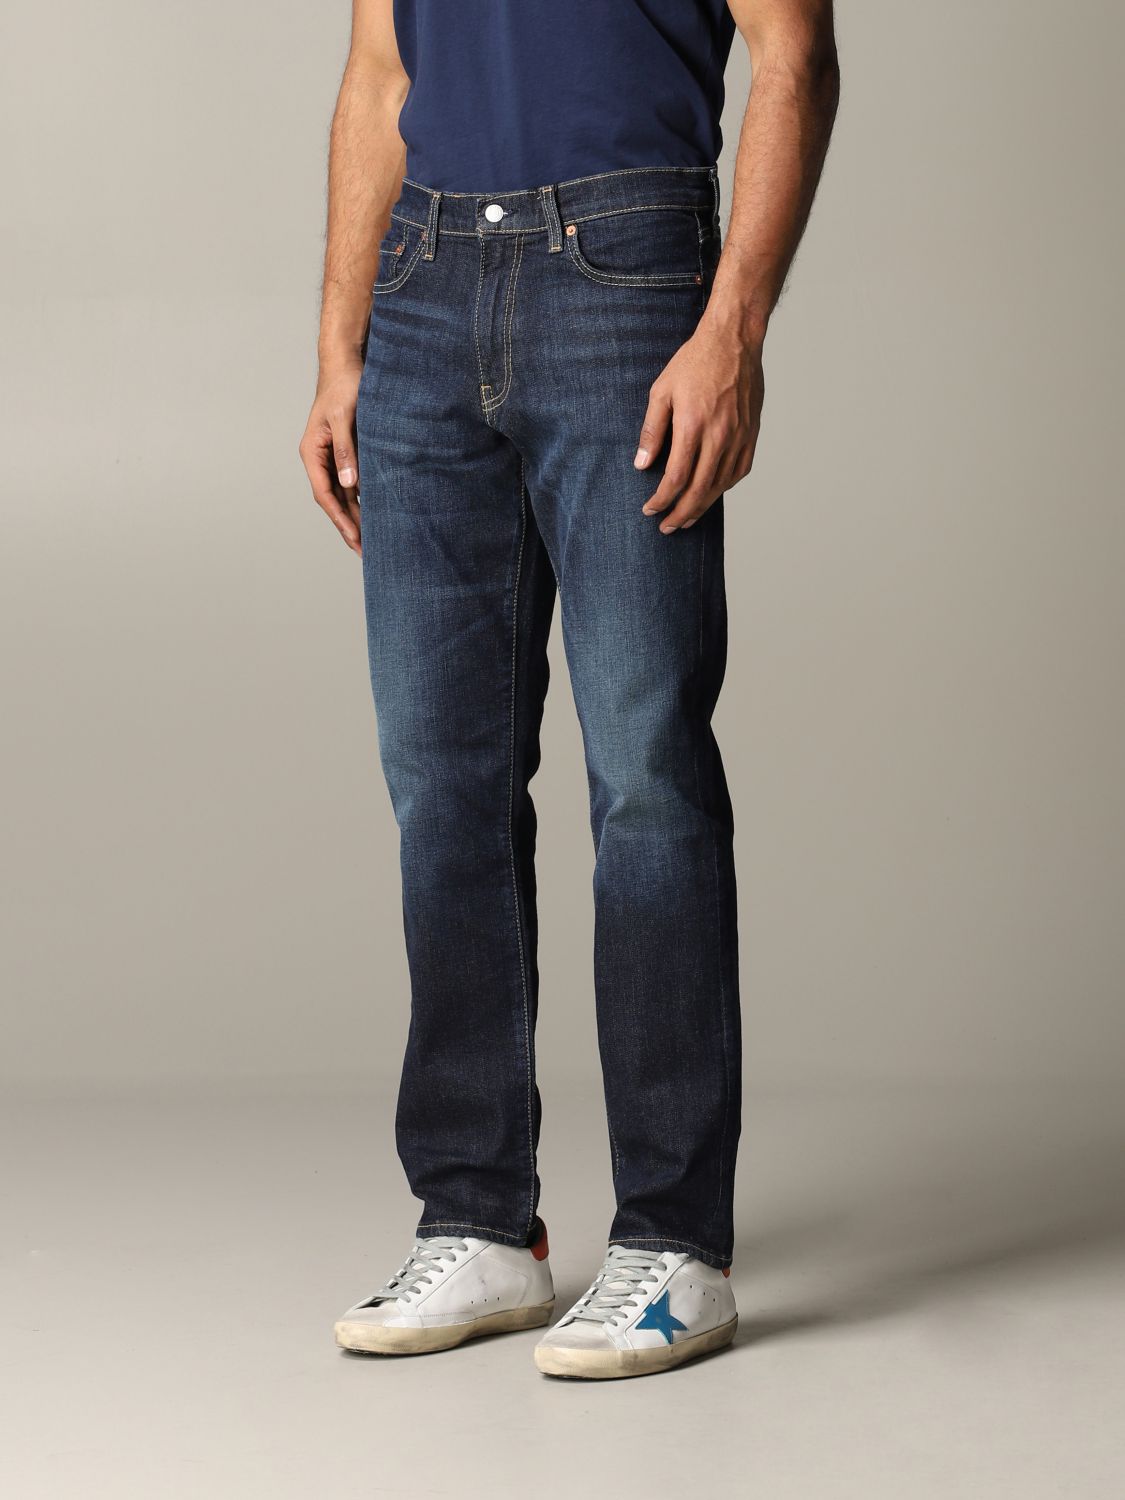 Levi's Outlet: 5-pocket jeans - Denim | Jeans Levi's 045114102 GIGLIO.COM